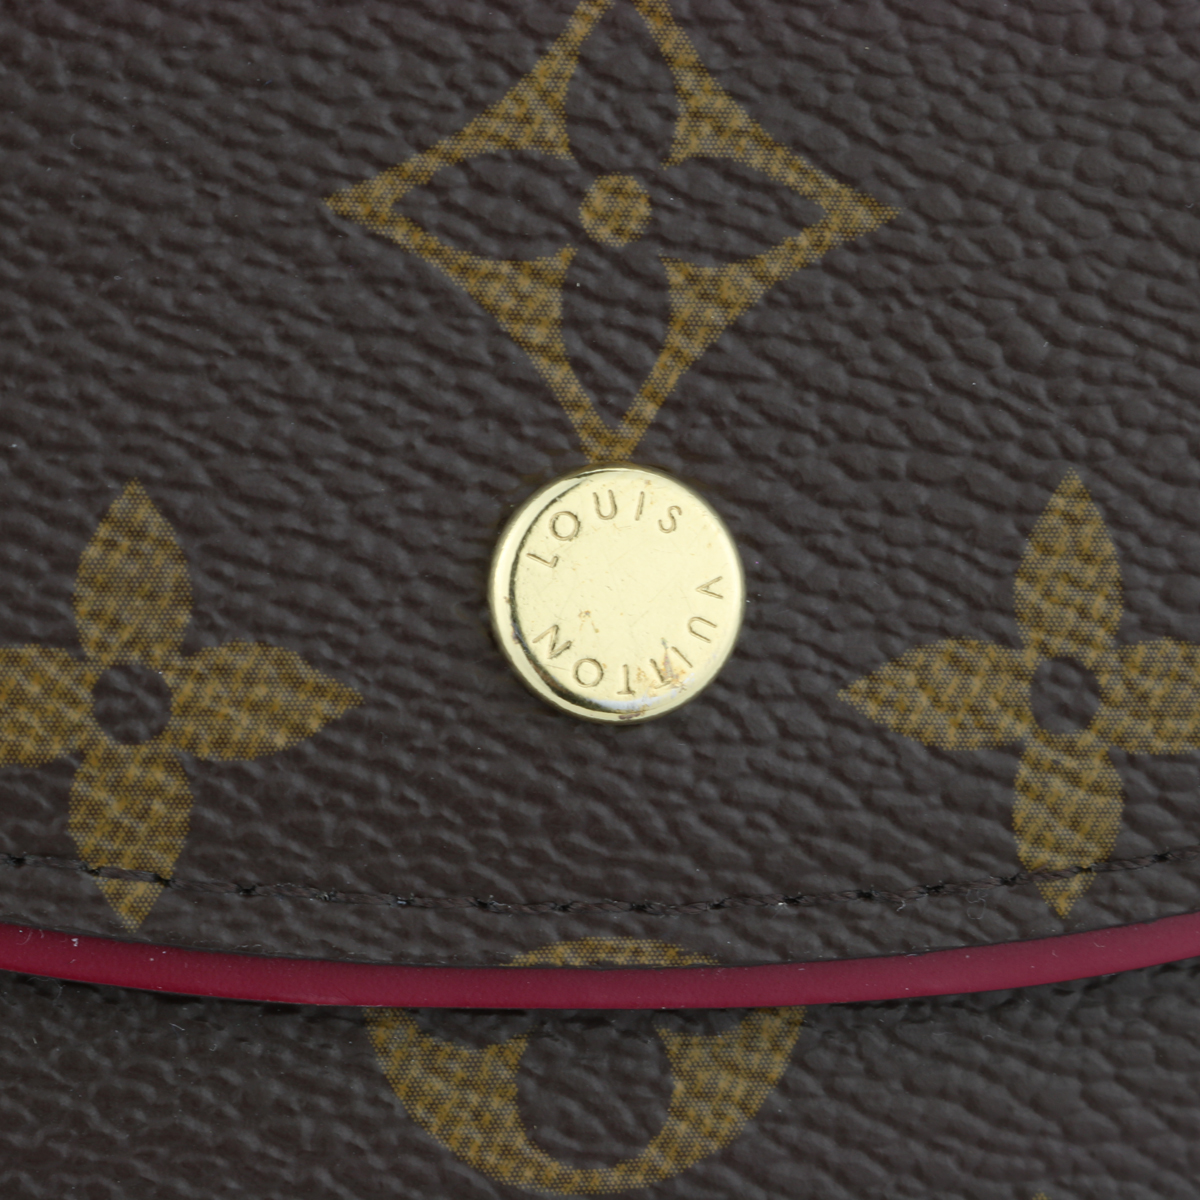 Louis Vuitton Compact Wallet Ariane Monogram Fuchsia